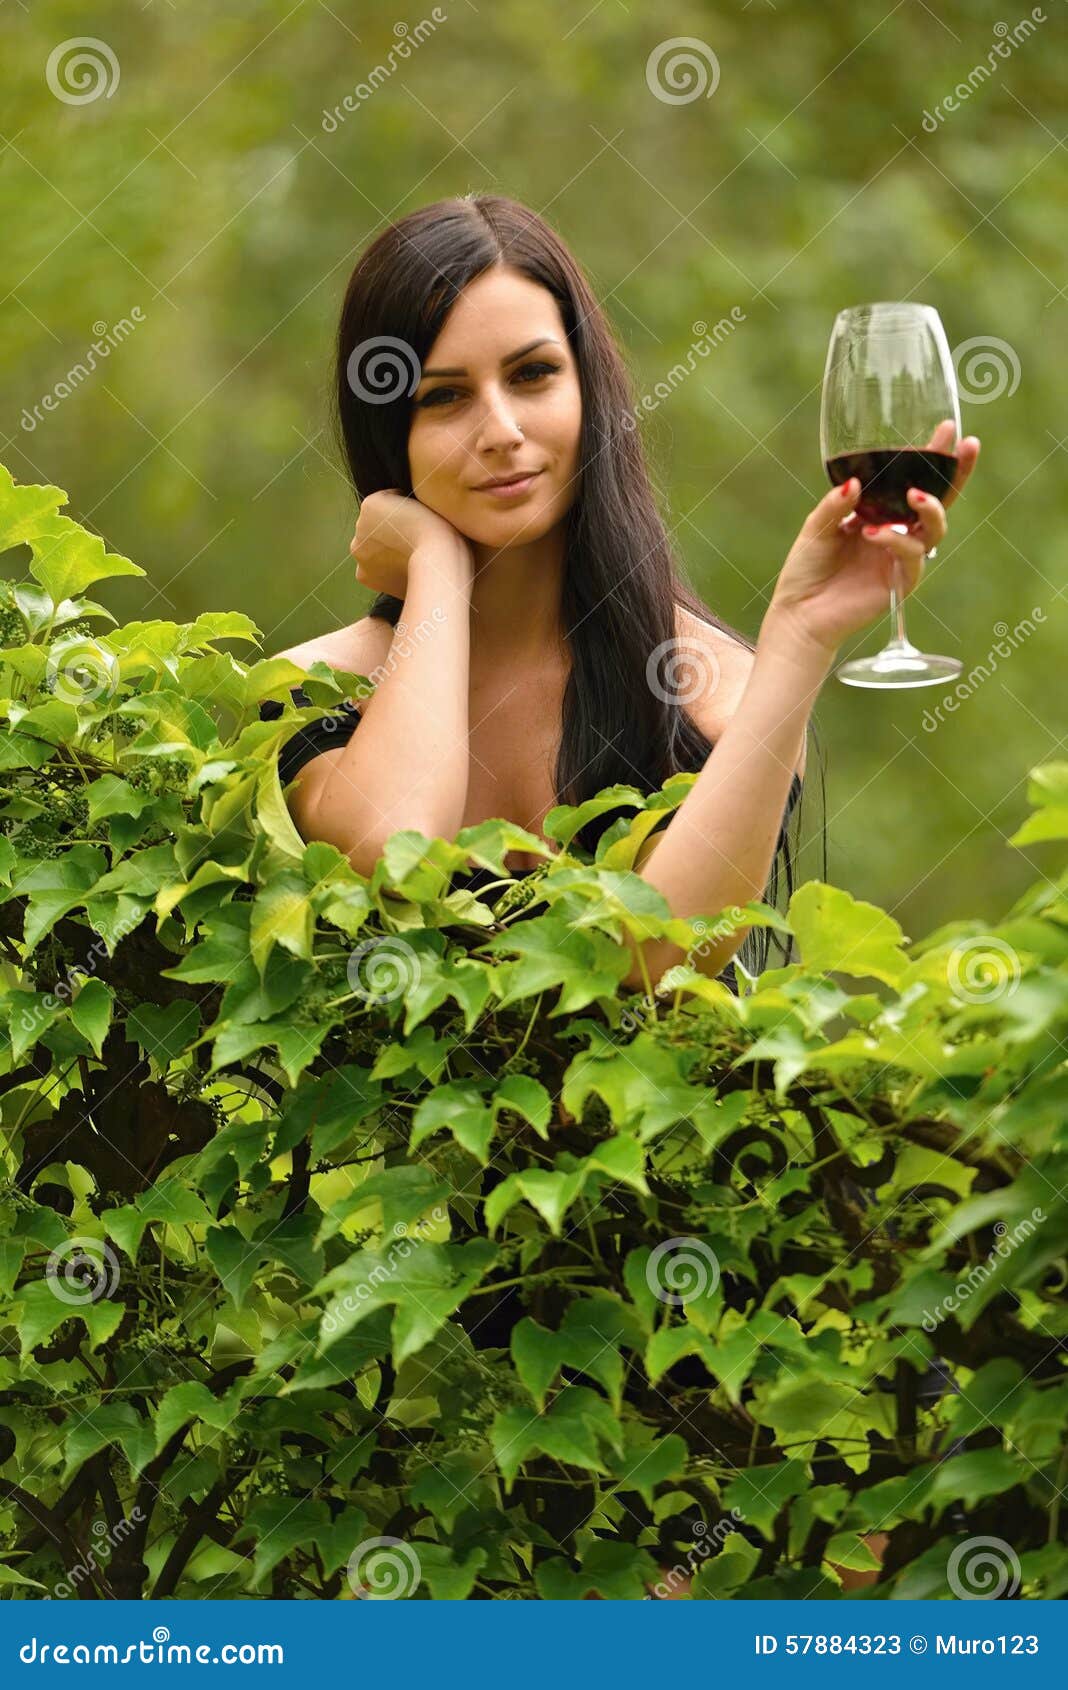 Woman drinking wine. stock image. Image of dress, glass - 57884323